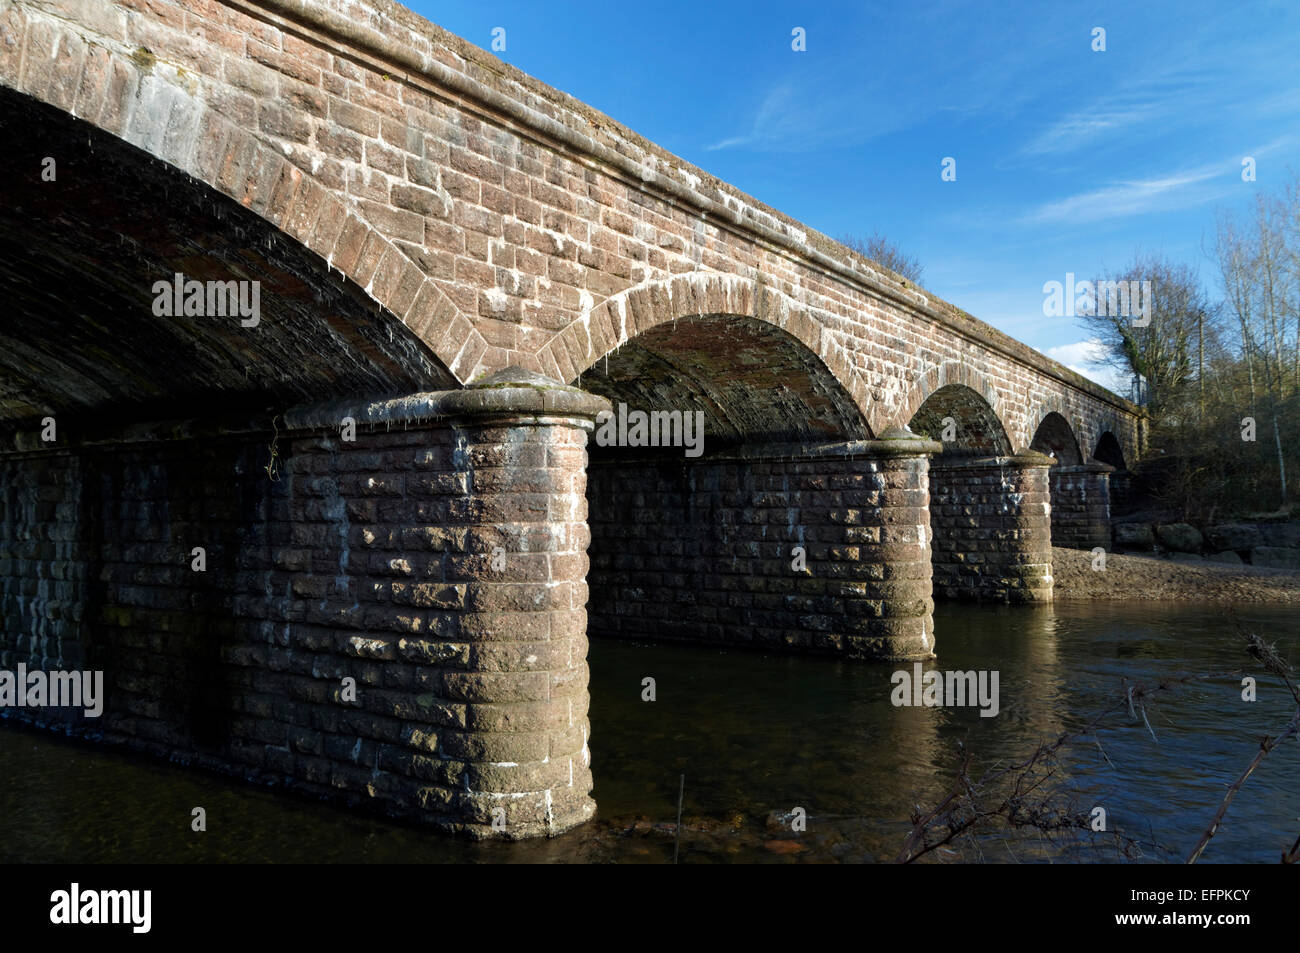 Railway bridge crossing River Taff, Radyr, Cardiff, South Wales, UK. Stock Photo